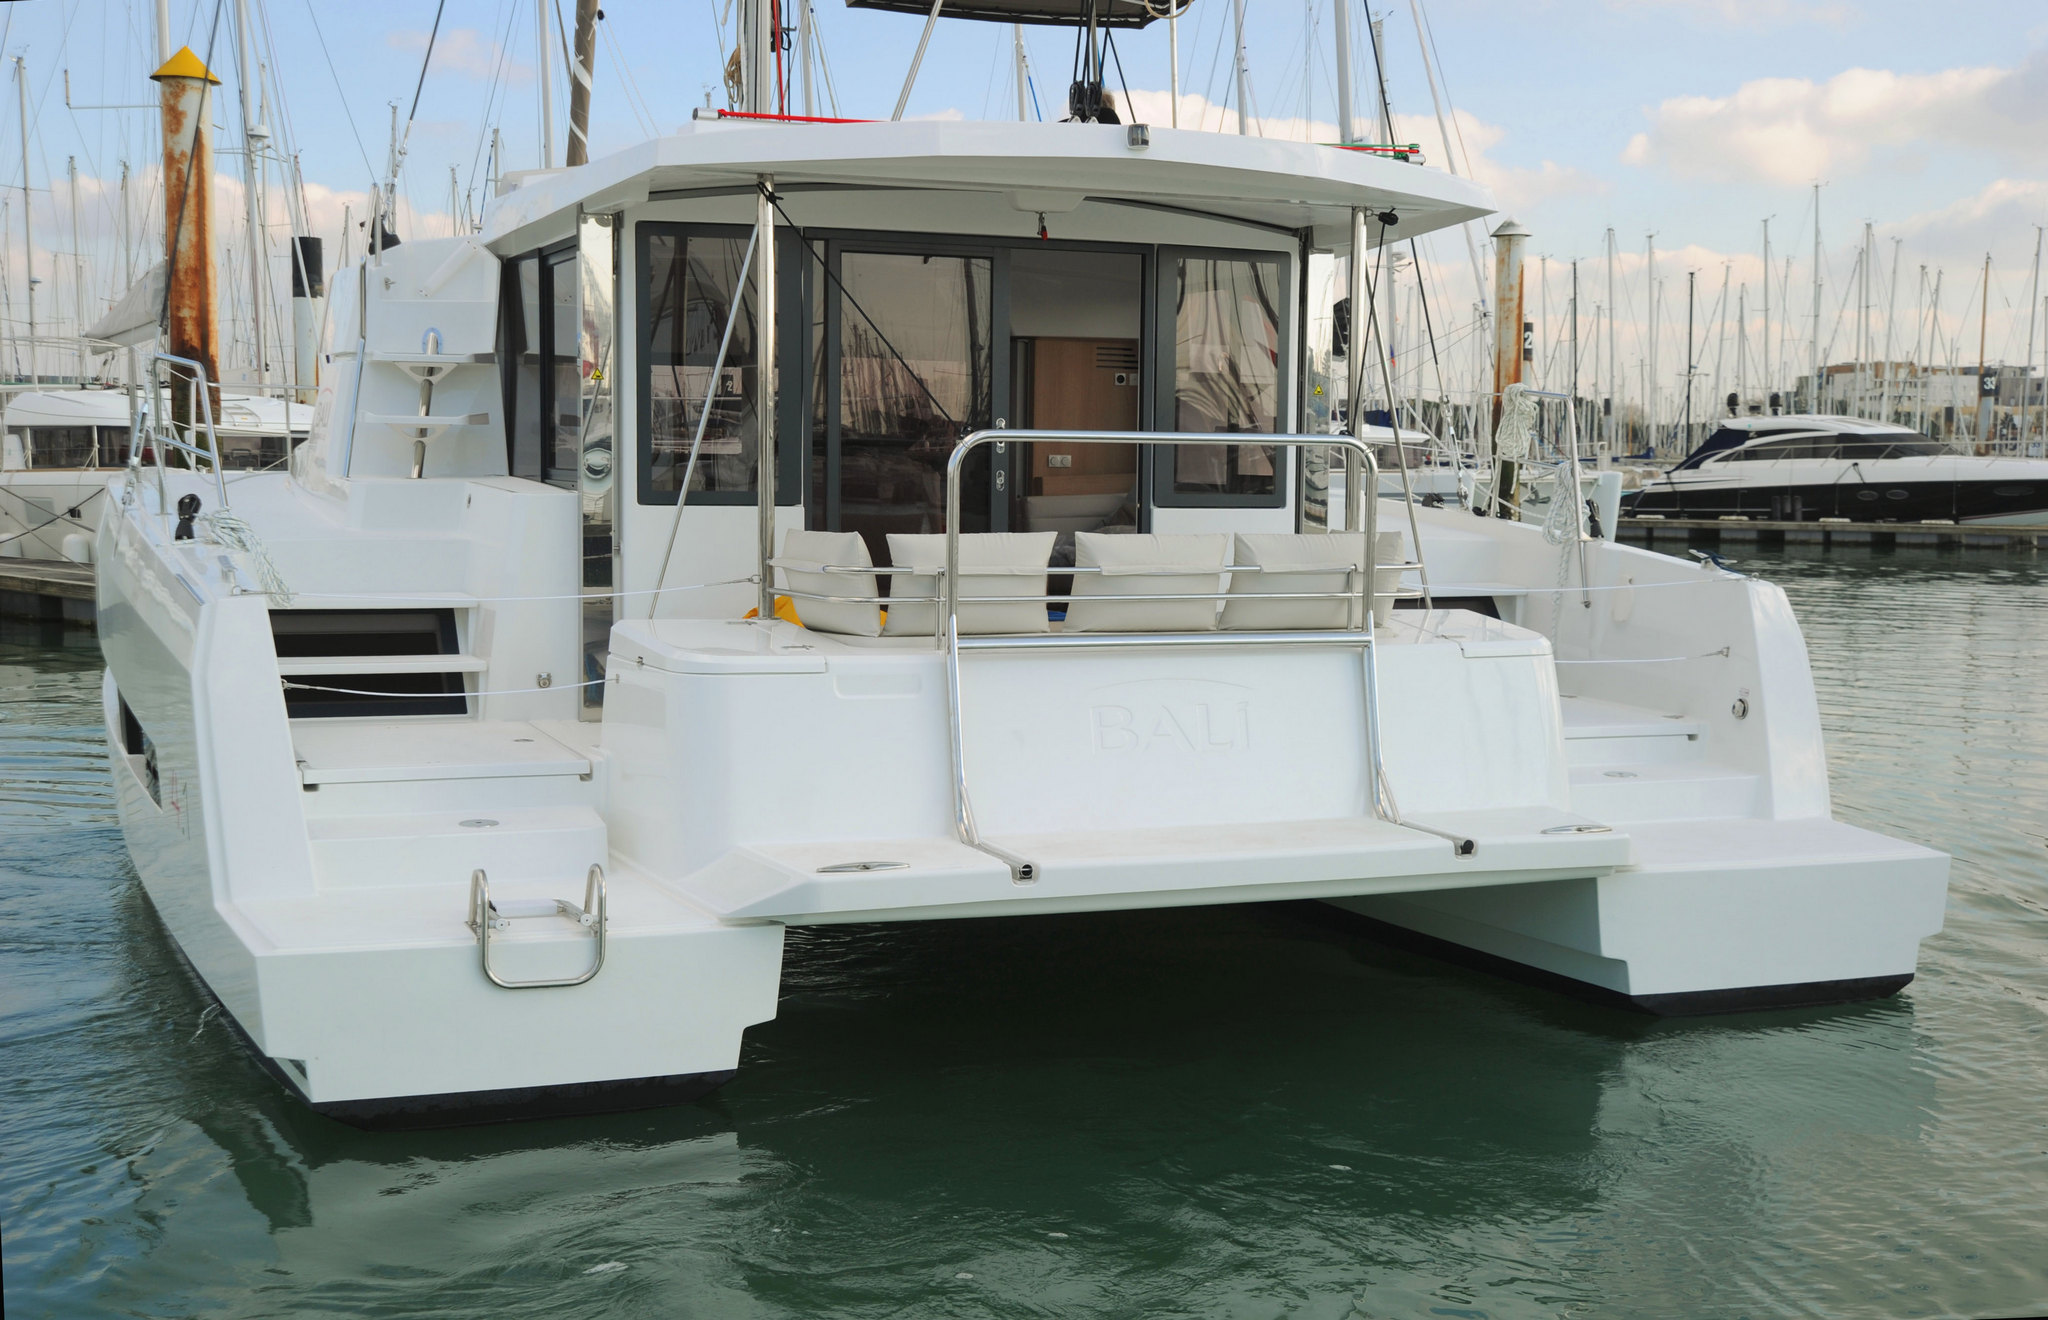 Catamarán EN CHARTER, de la marca Bali Catamaran modelo 4.1 y del año 2018, disponible en Marina Port de Mallorca Palma Mallorca España